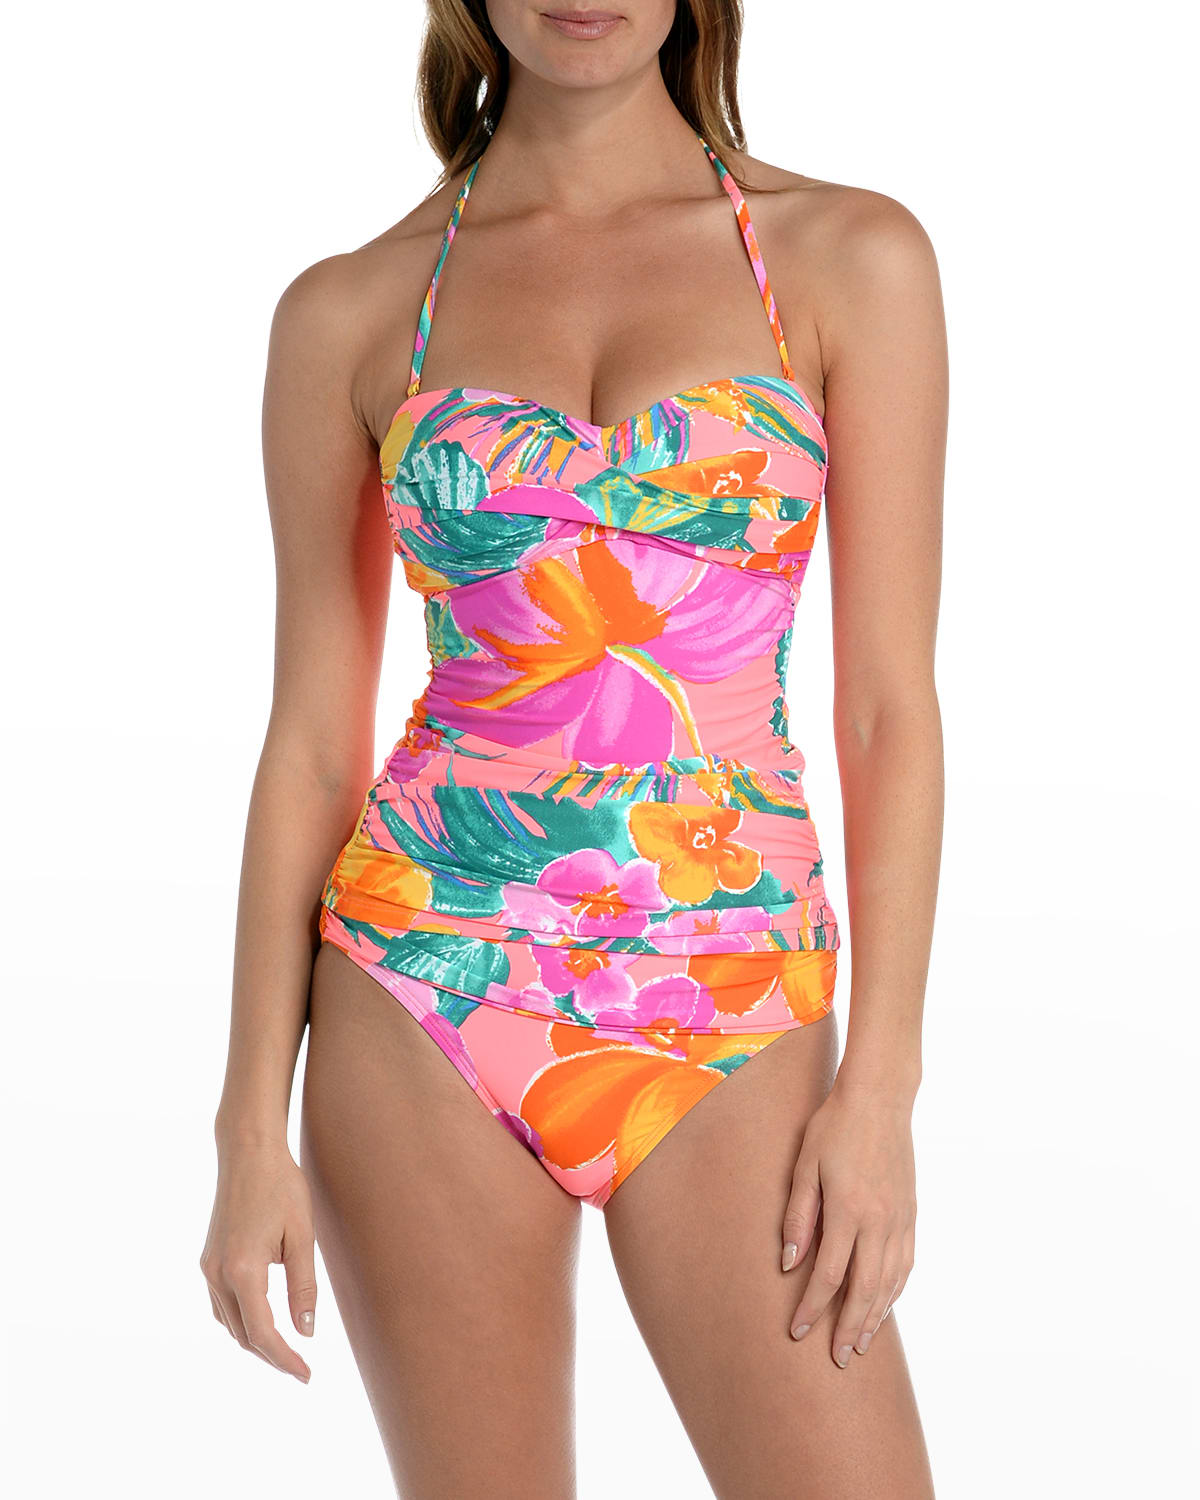 Catalina Hot Teal Swimsuit Tankini Top Size Medium 8-10 Swimwear Removable cups